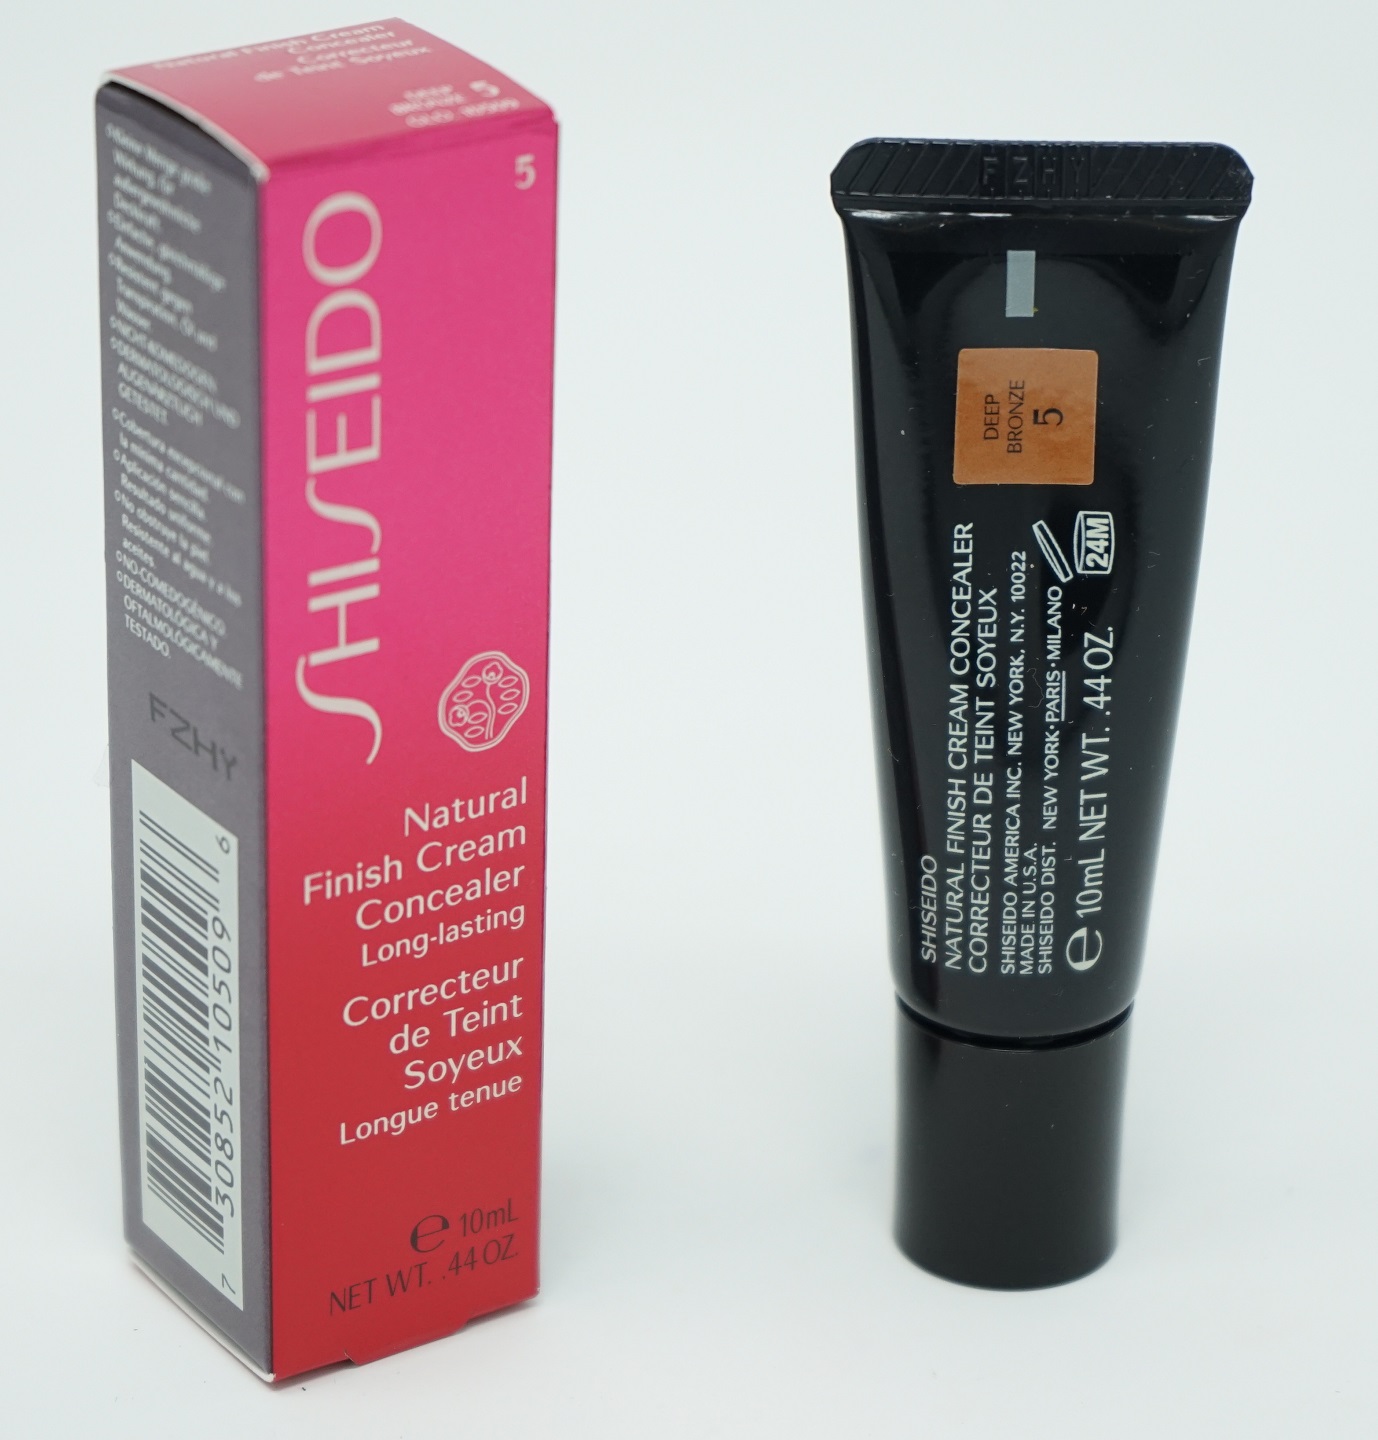 Shiseido Natural Finish Cream Concealer long-lasting 5 Deep Bronze